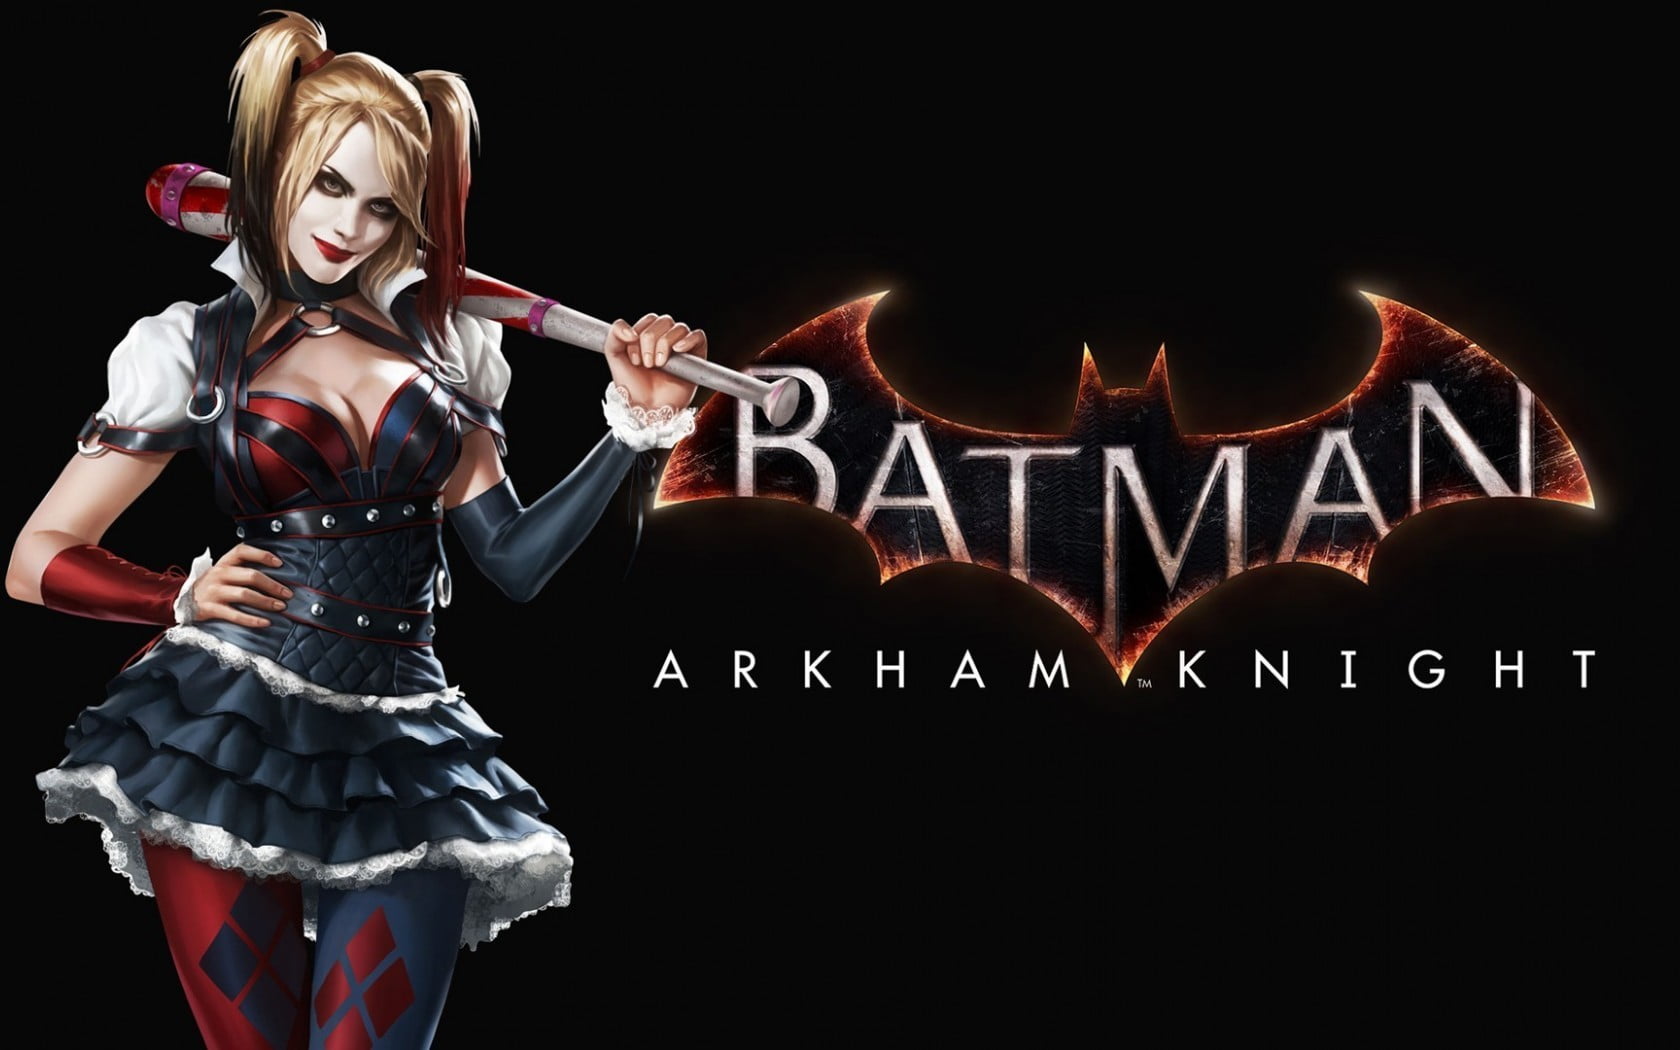 Batman Arkham Knight Harley Quinn digital wallpaper, Harley Quinn, Batman, Joker, DC Comics